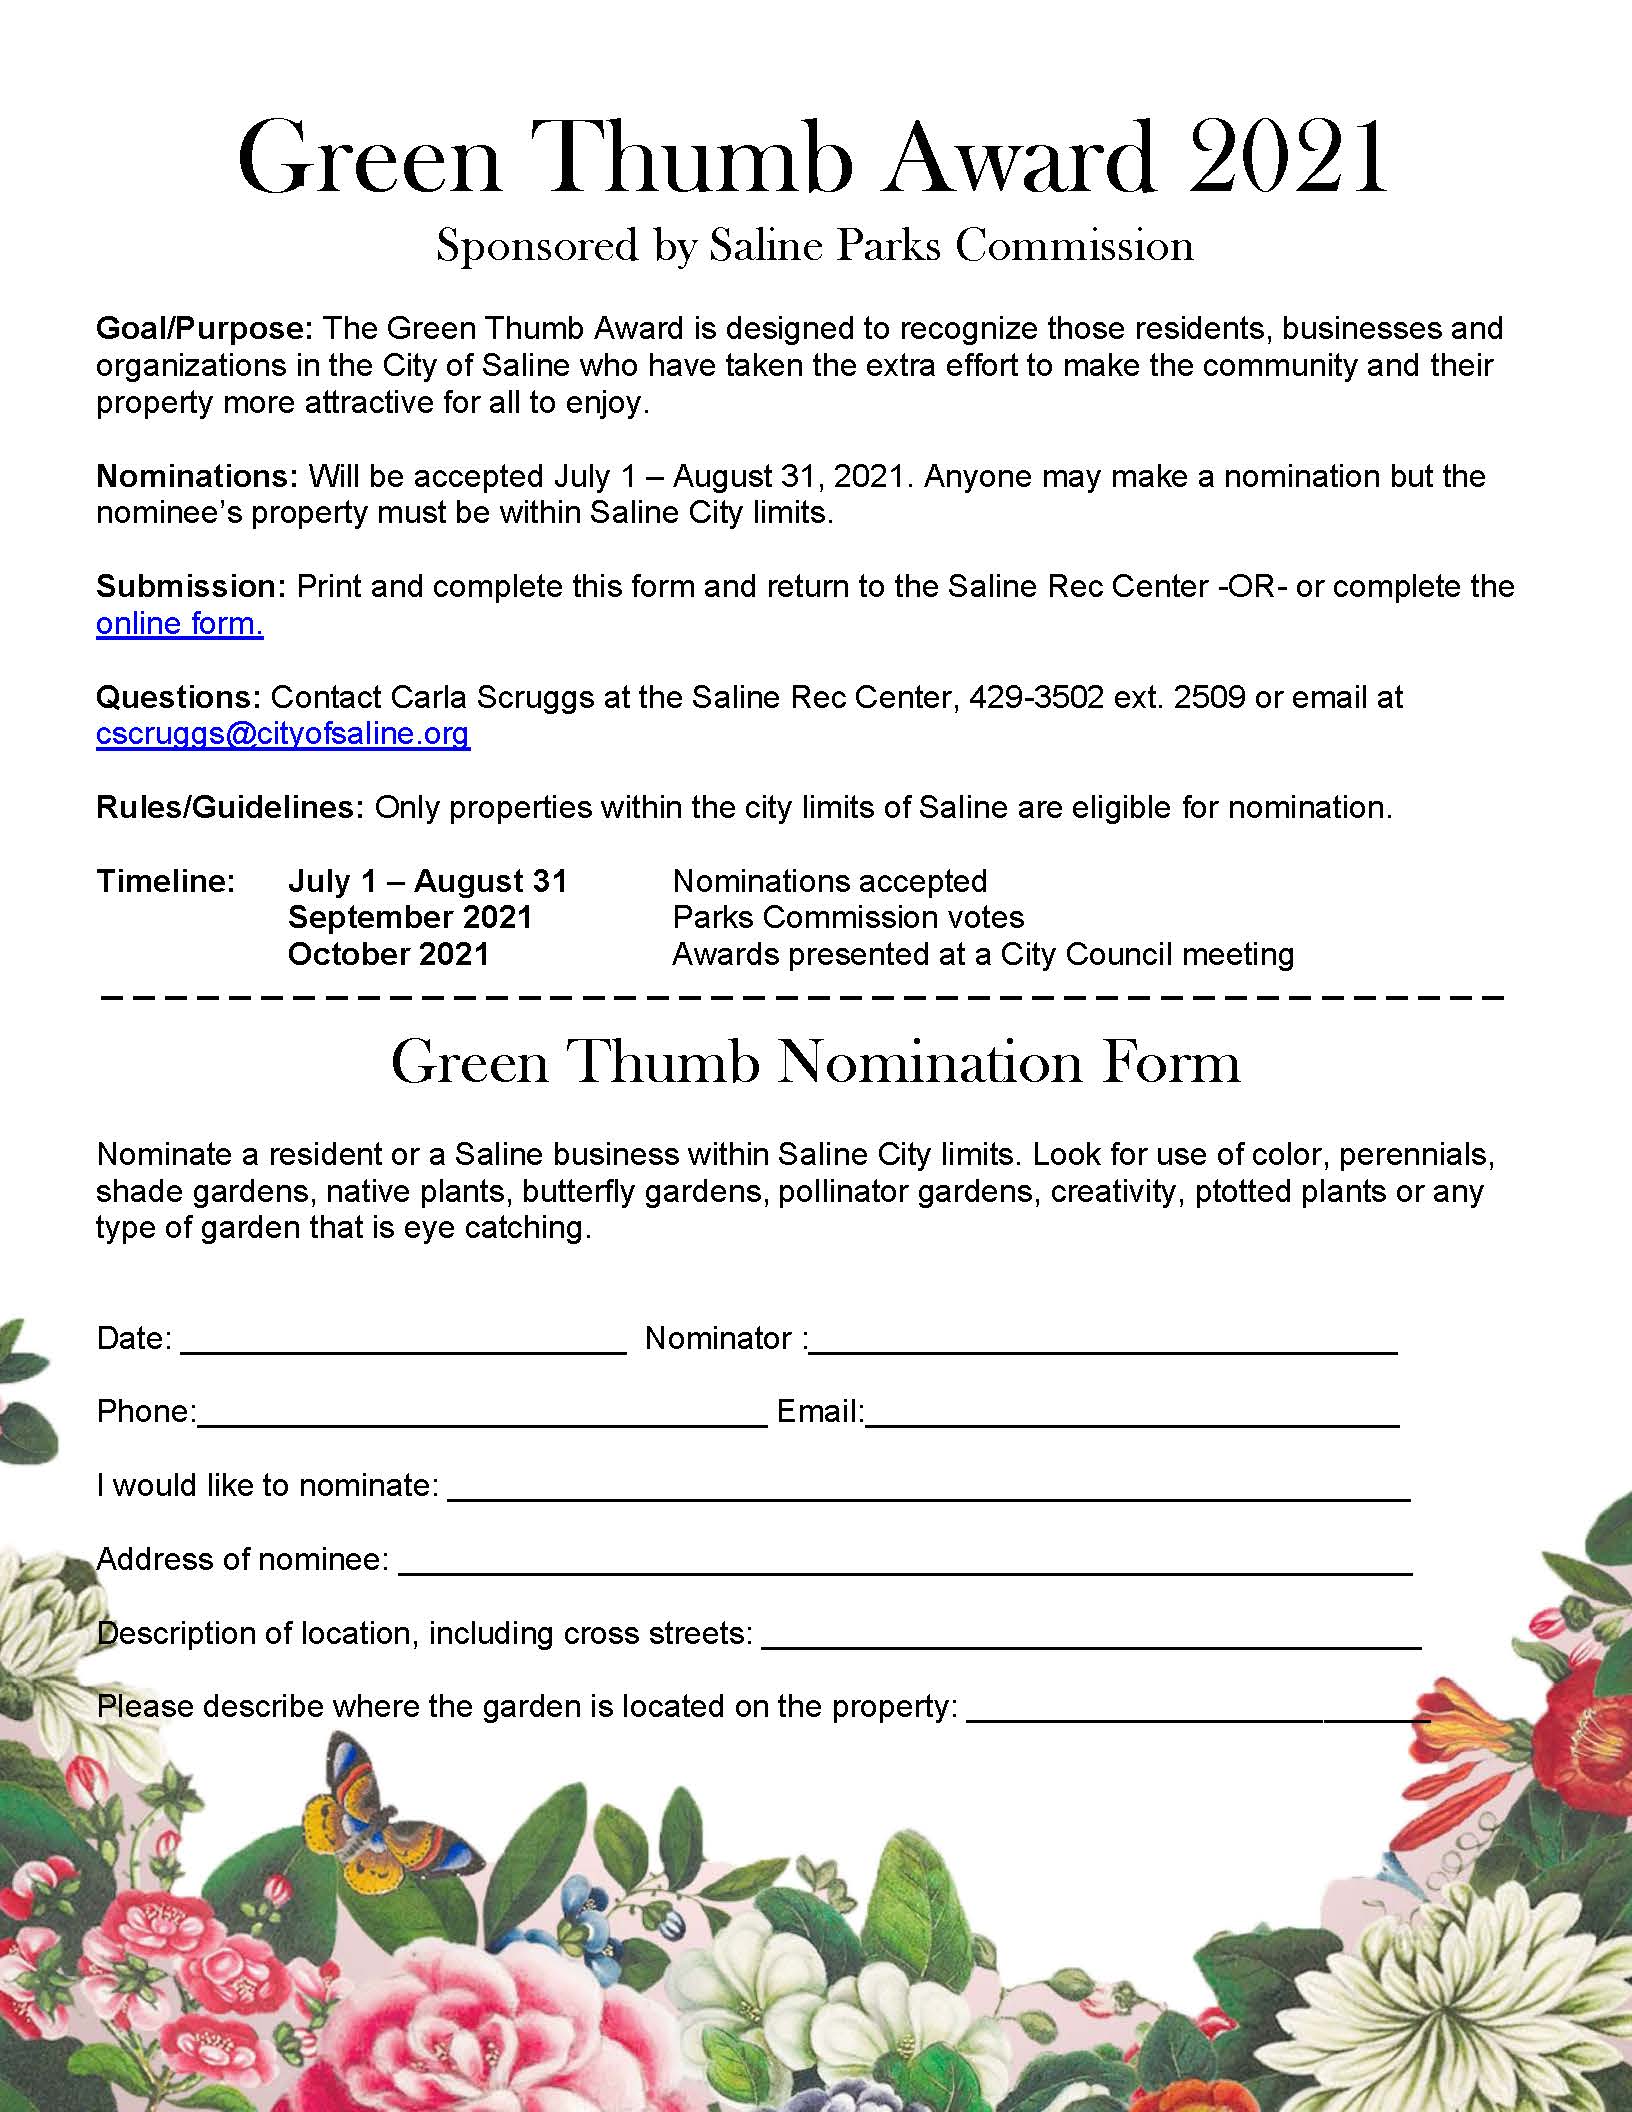 Green Thumb Nomination form to print